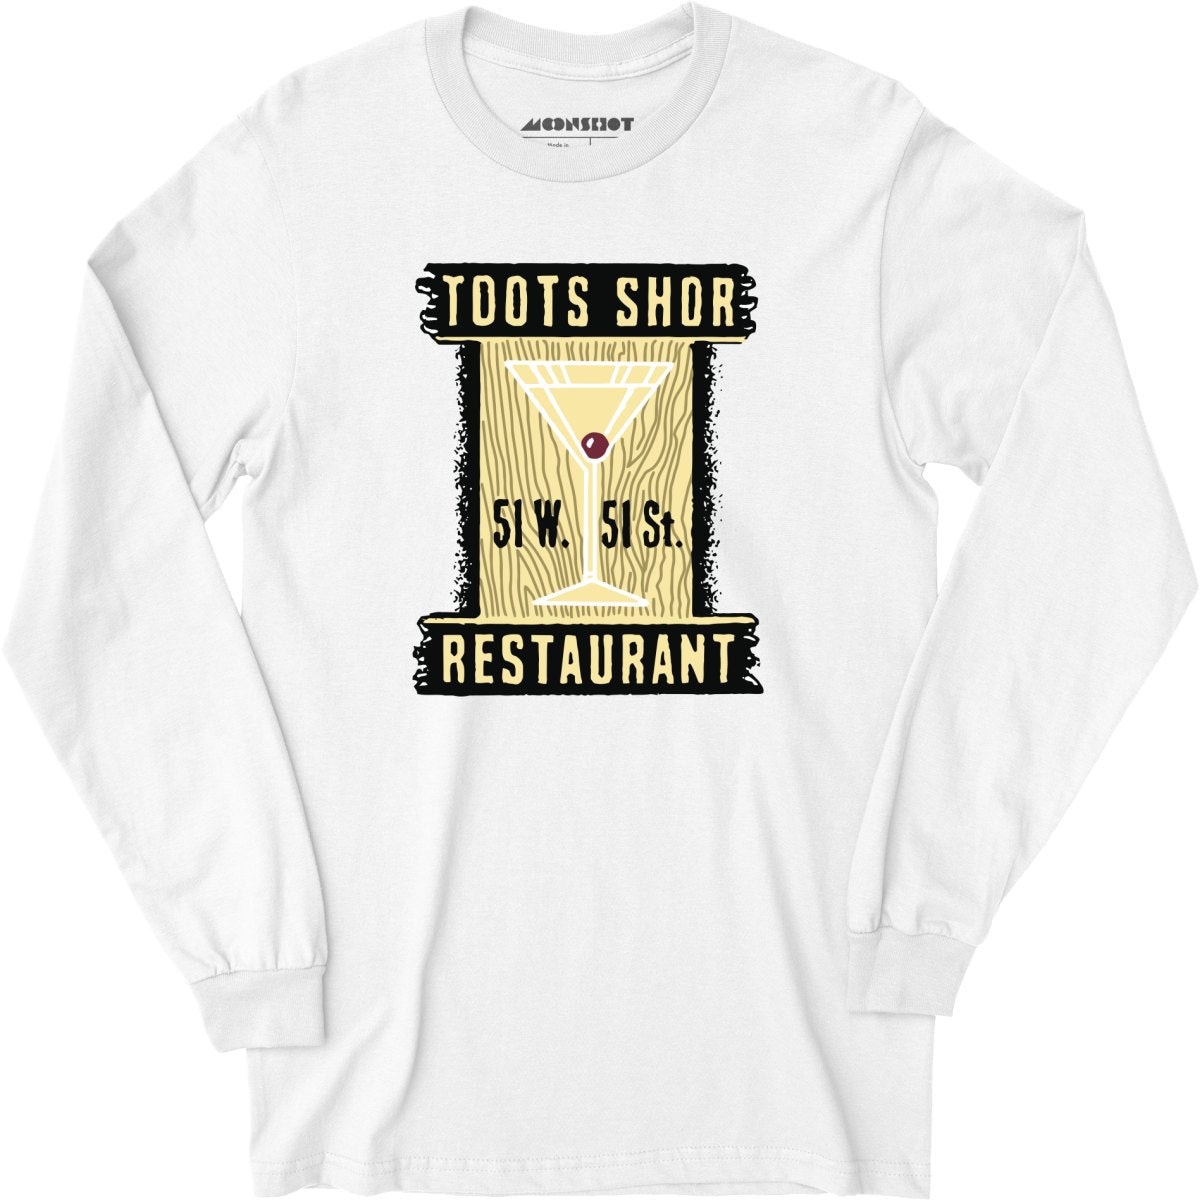 Toots Shor - Manhattan, NY - Vintage Restaurant - Long Sleeve T-Shirt